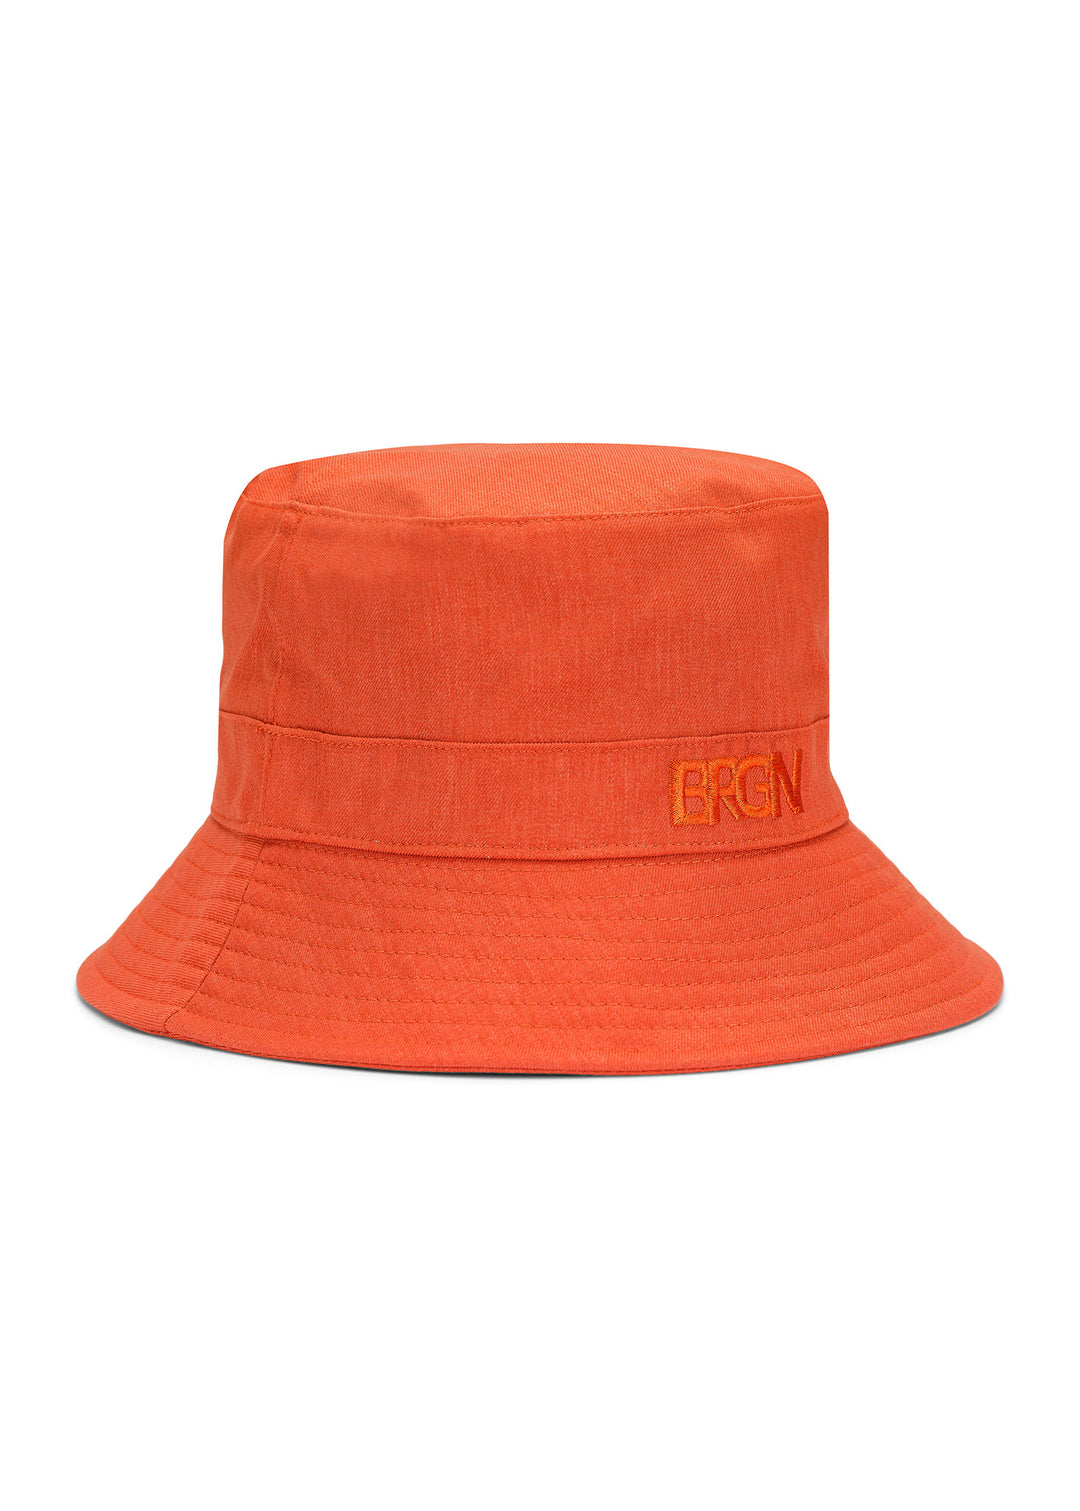 BRGN Bucket Accessories 275 Sunset Orange